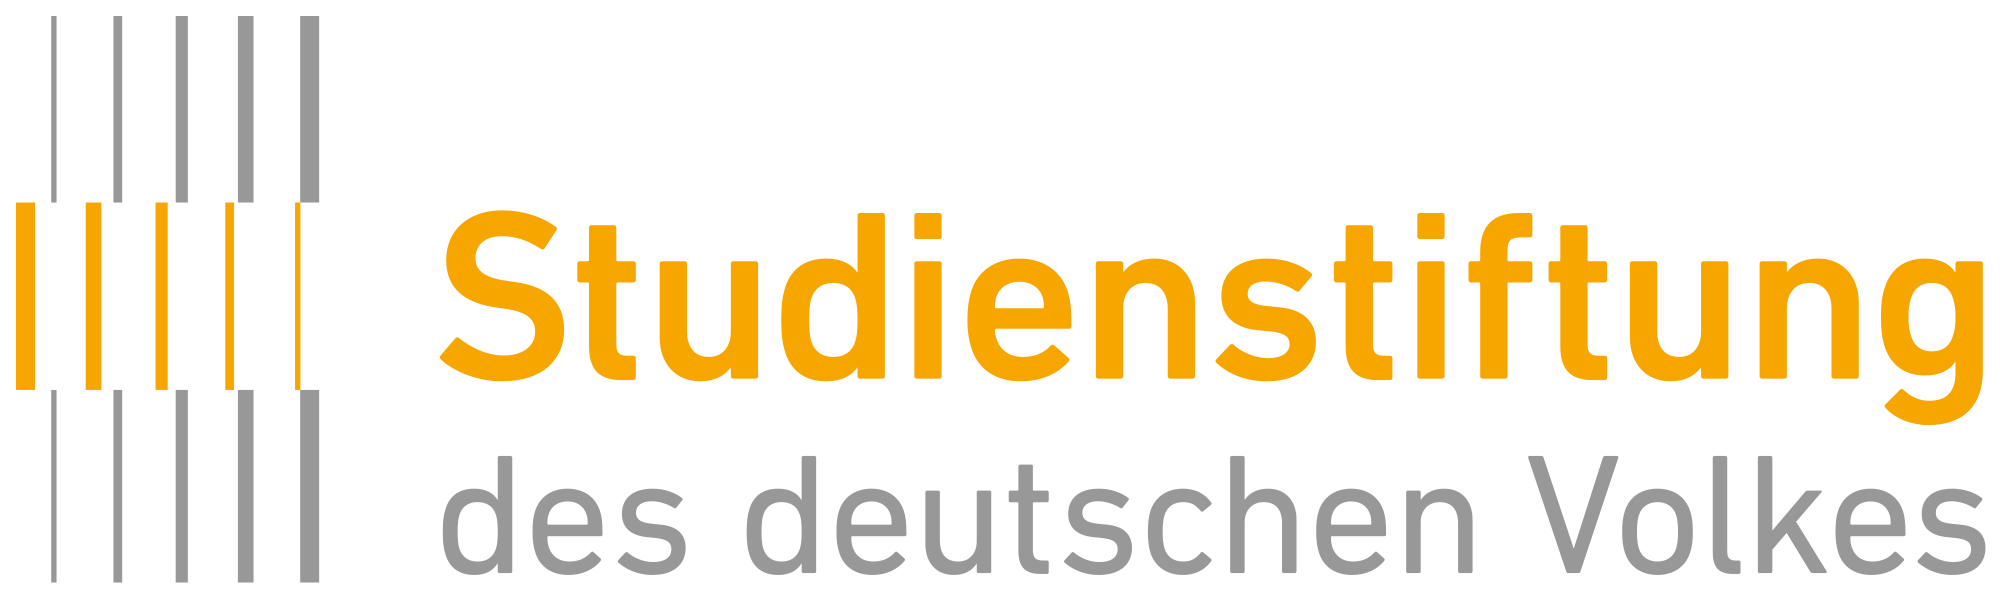 German Academic Scholarship Foundation